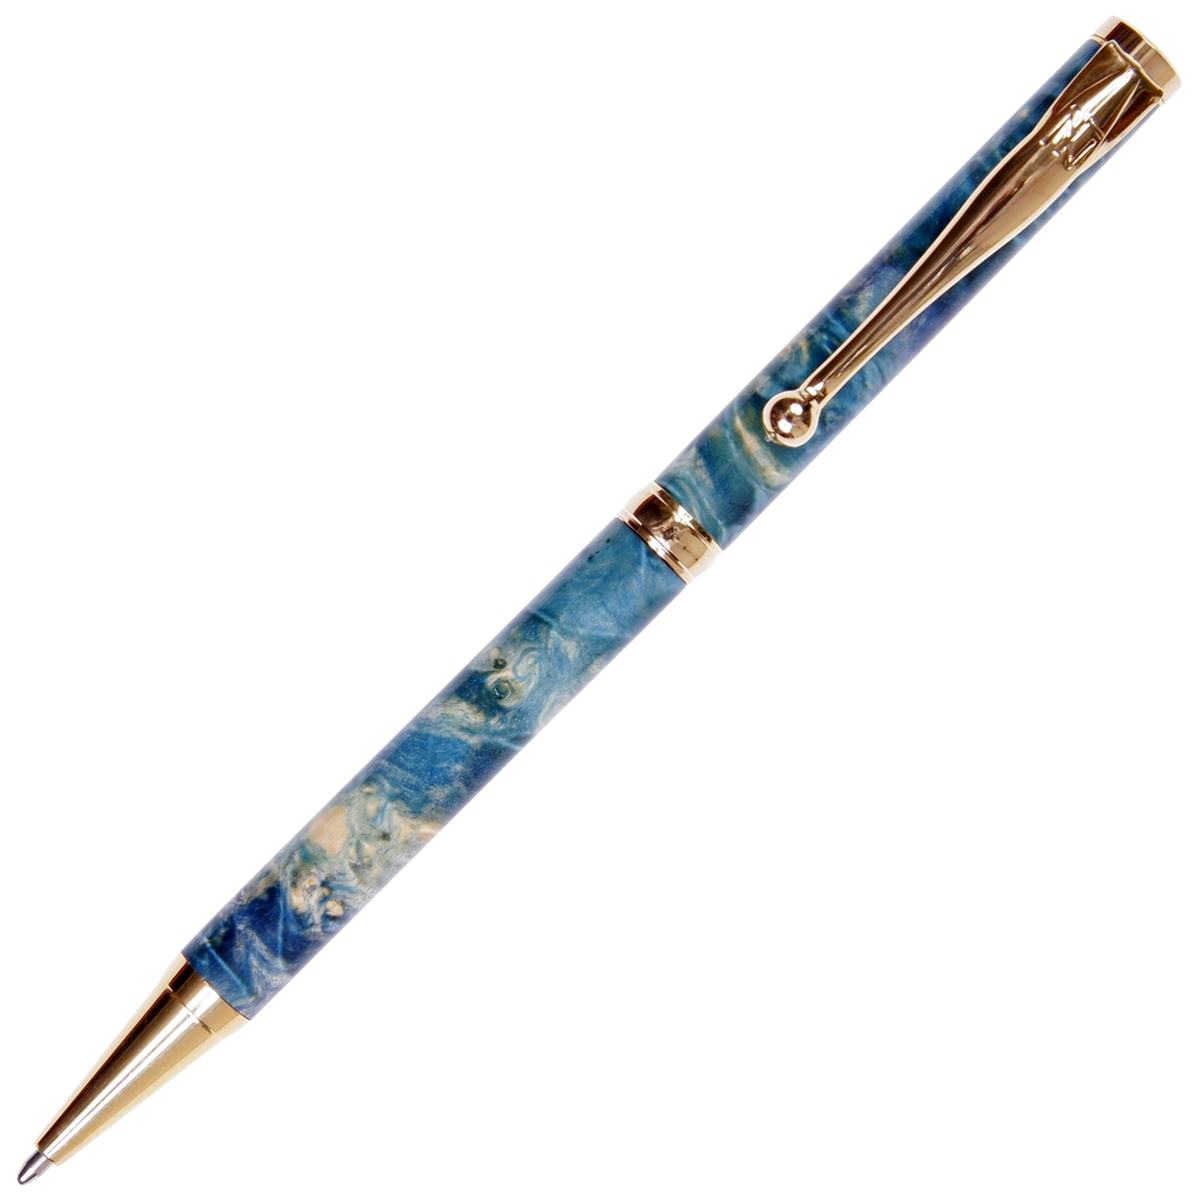 Slimline Twist Pen - Blue Box Elder